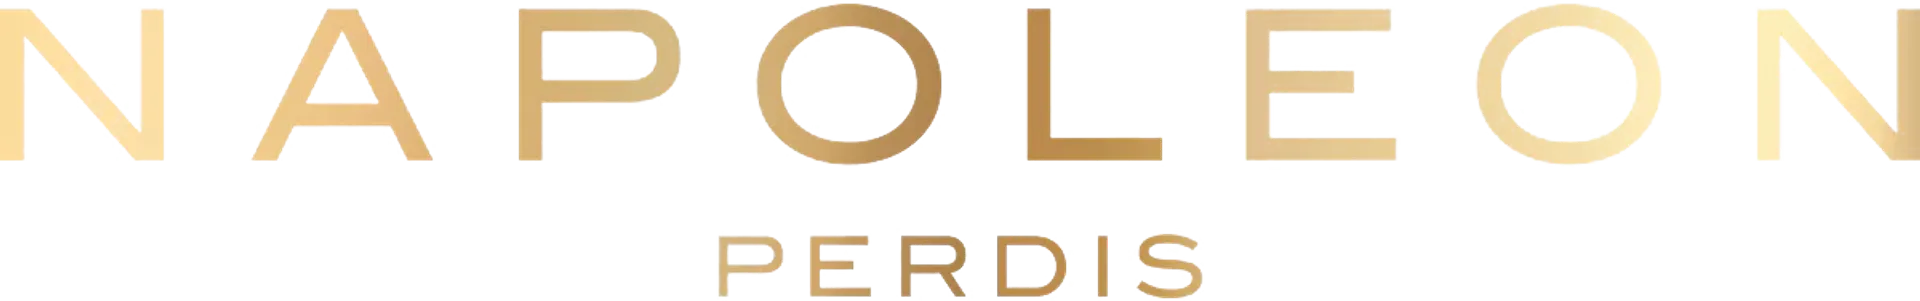 NAPOLEON PERDIS logo of current catalogue